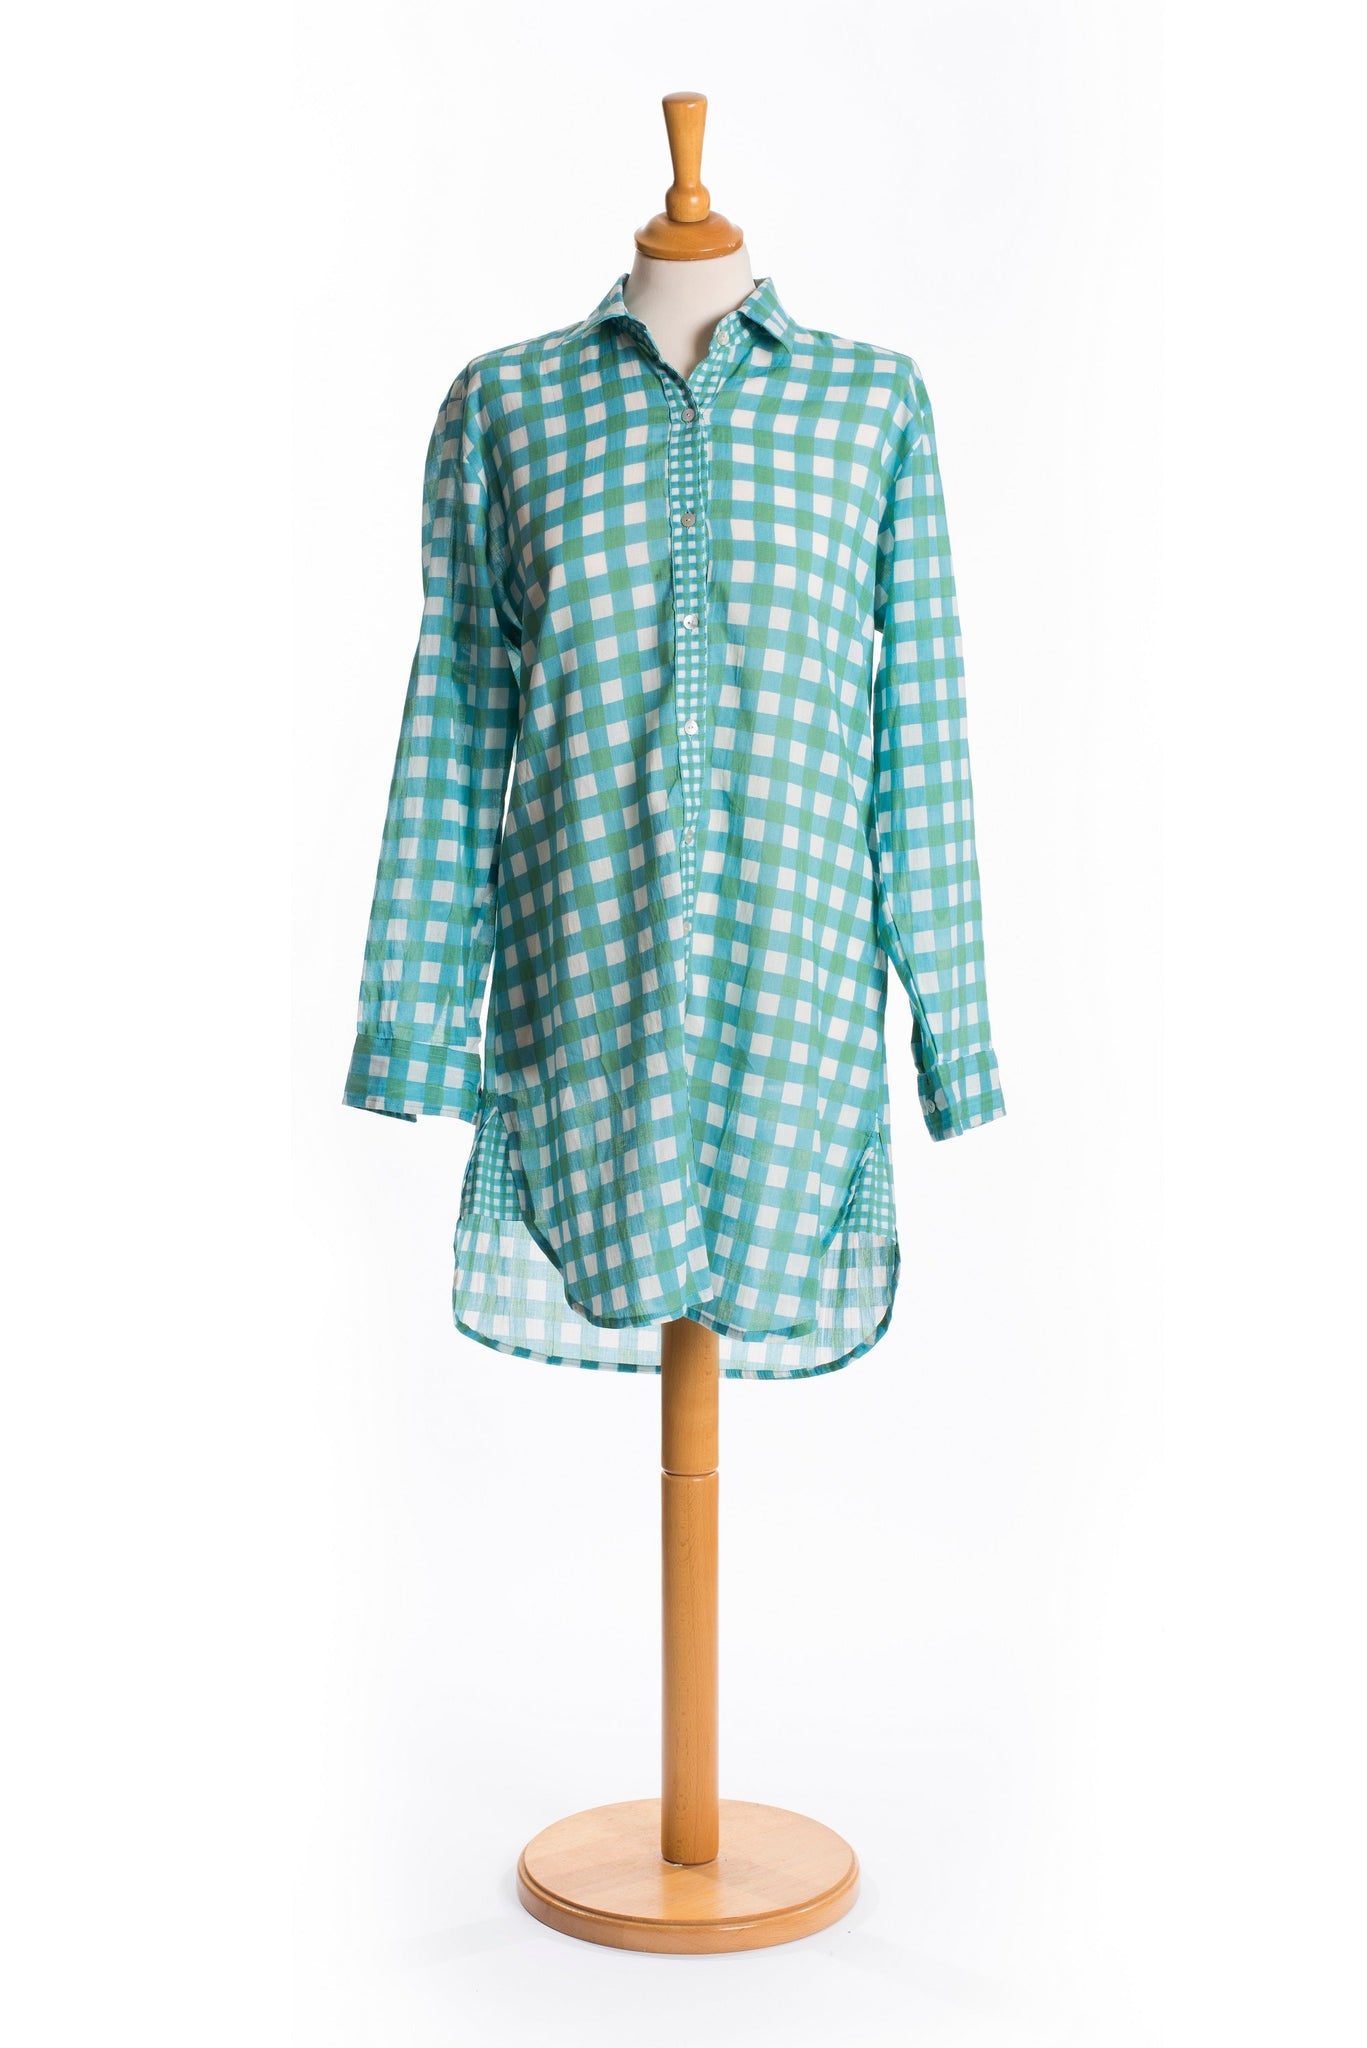 Women's long sleeve cotton shirt with check print design - SANGU